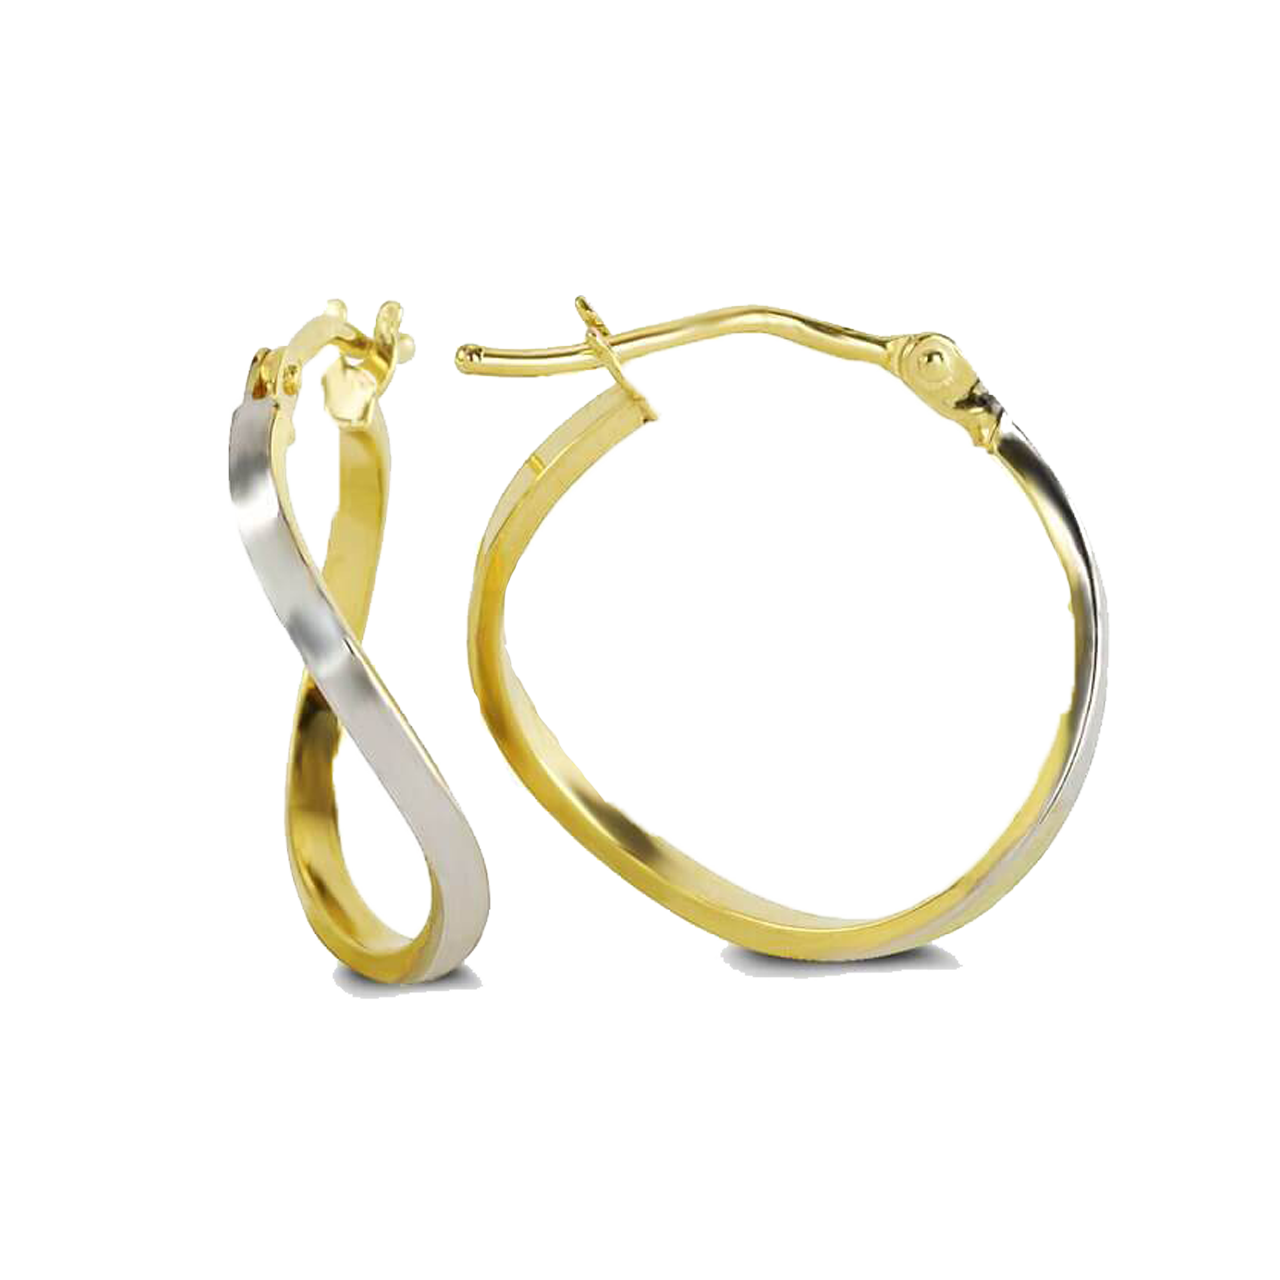 10K White And Yellow Gold Fancy Hoop Earrings